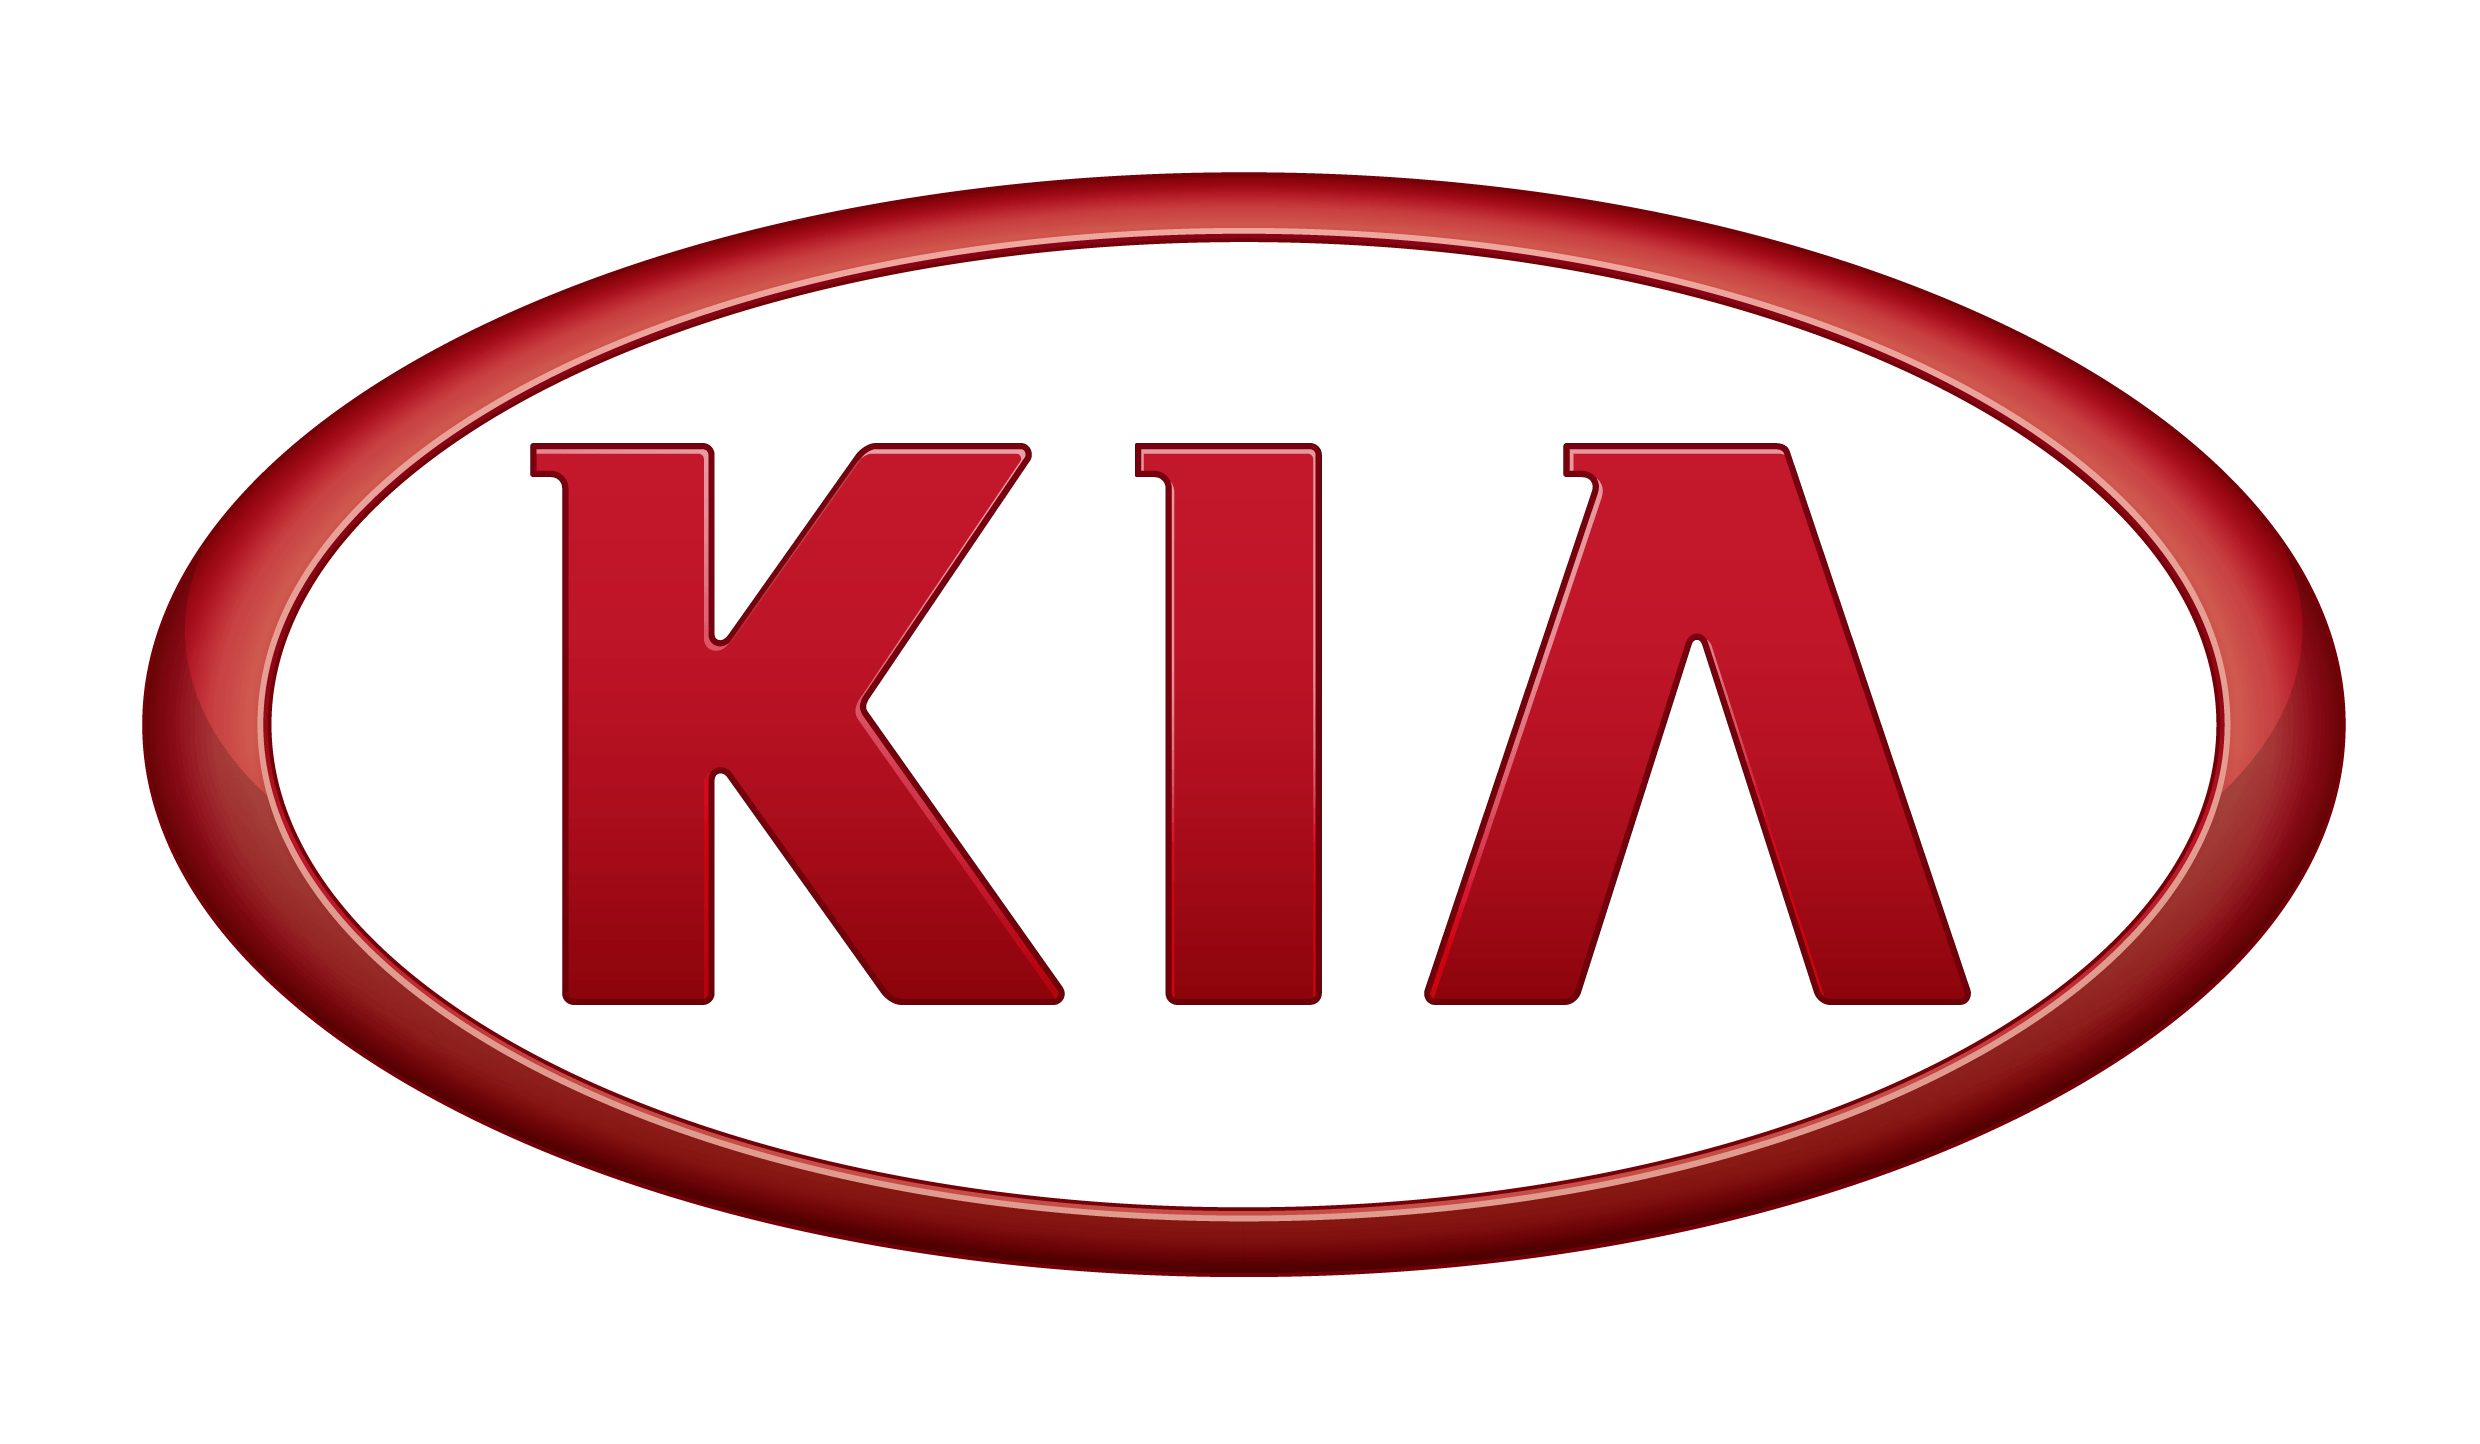 Red Oval Circle Logo - Kia Logo, Kia Car Symbol Meaning and History | Car Brand Names.com